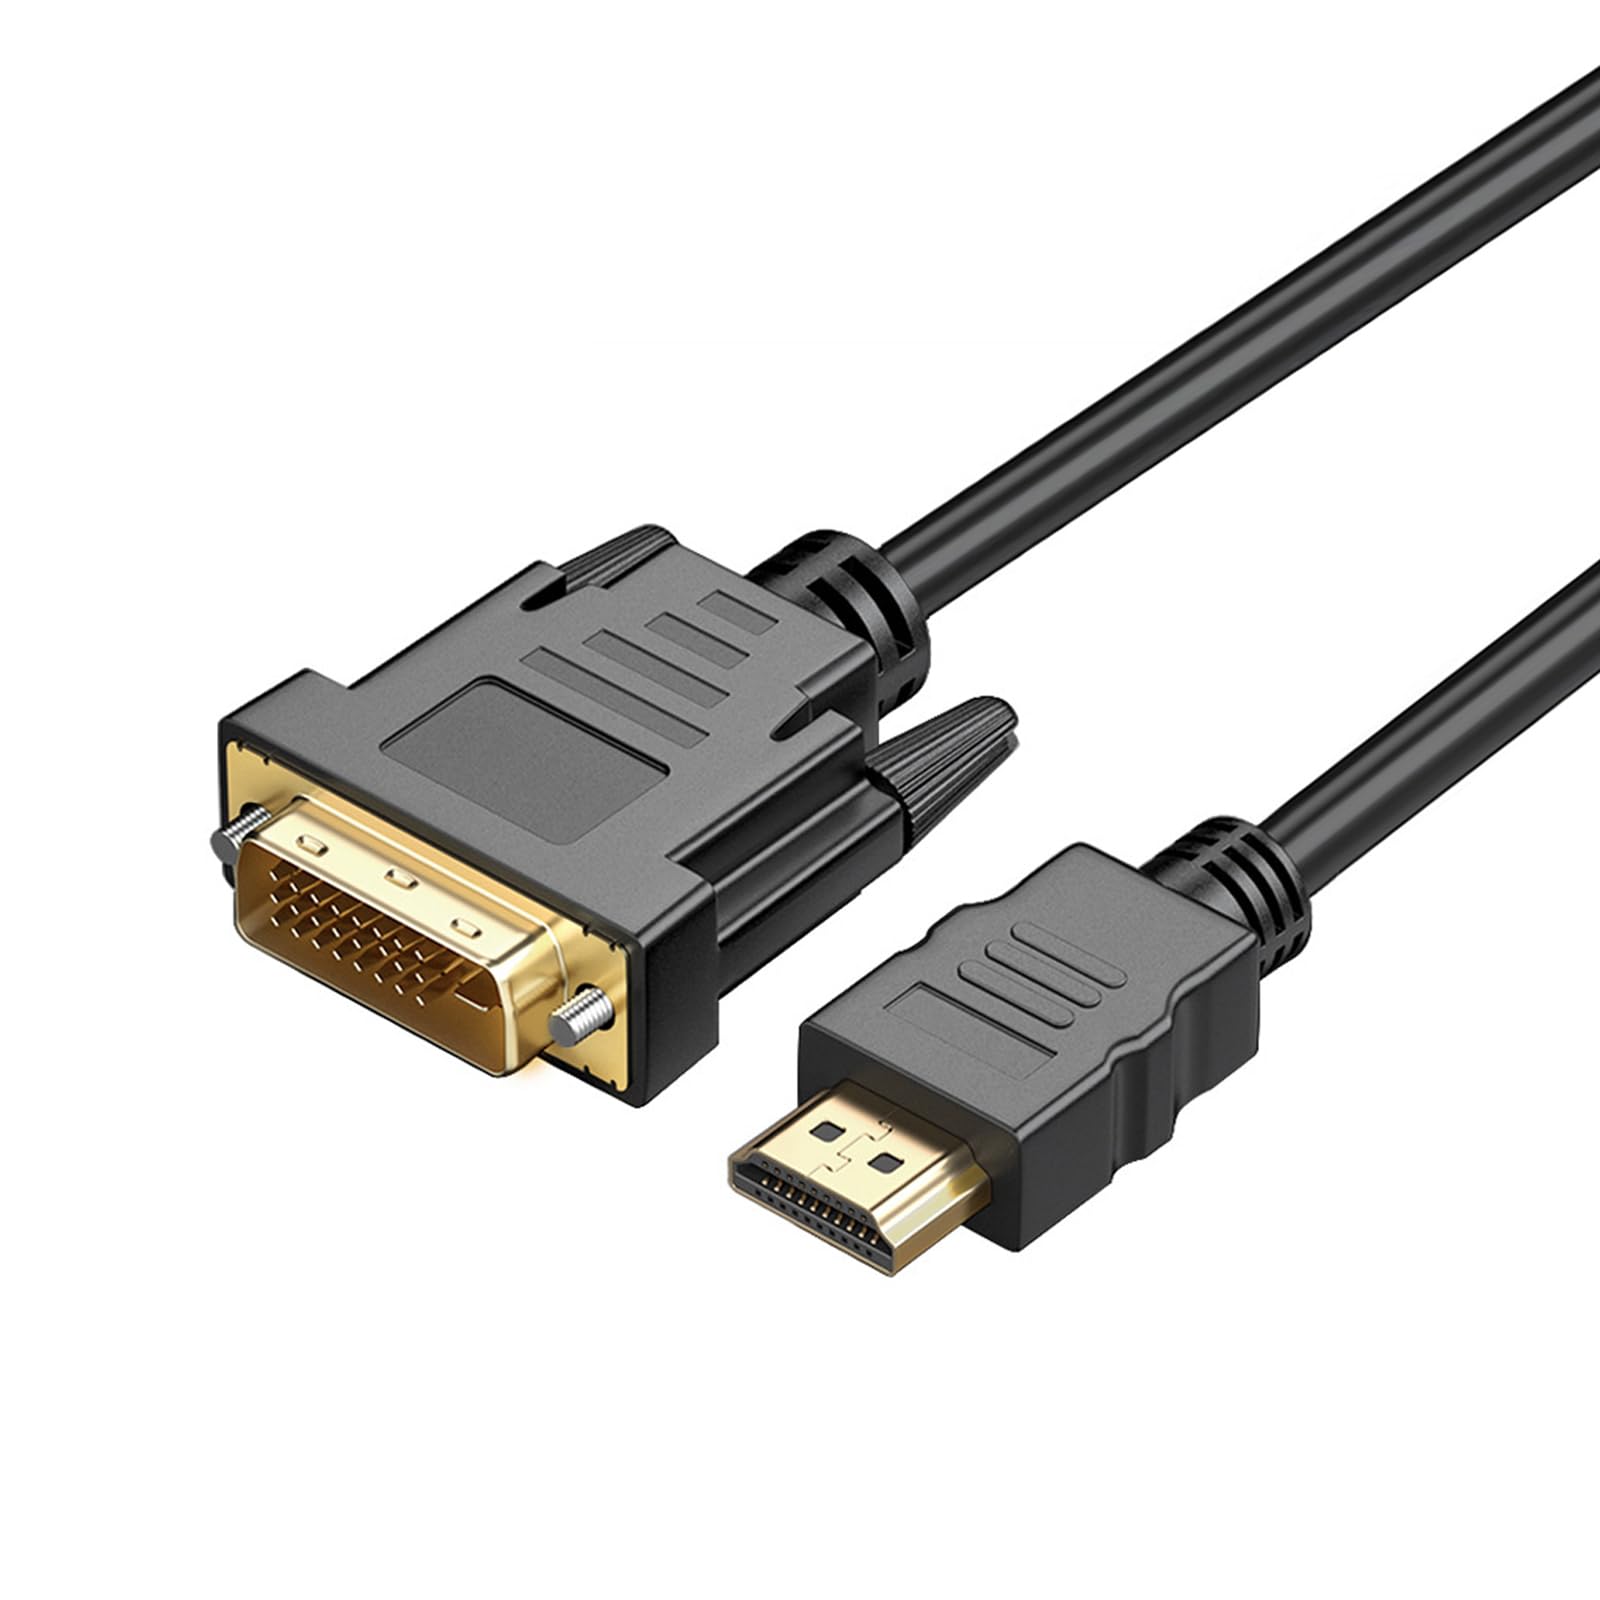 DVI 変換 HDMIケーブル，双方向伝送 DVI 24pinオス to HDMI オス 金メッキ 適用コンピューター,デスクトップ,ラップトップ,PC,モニター,